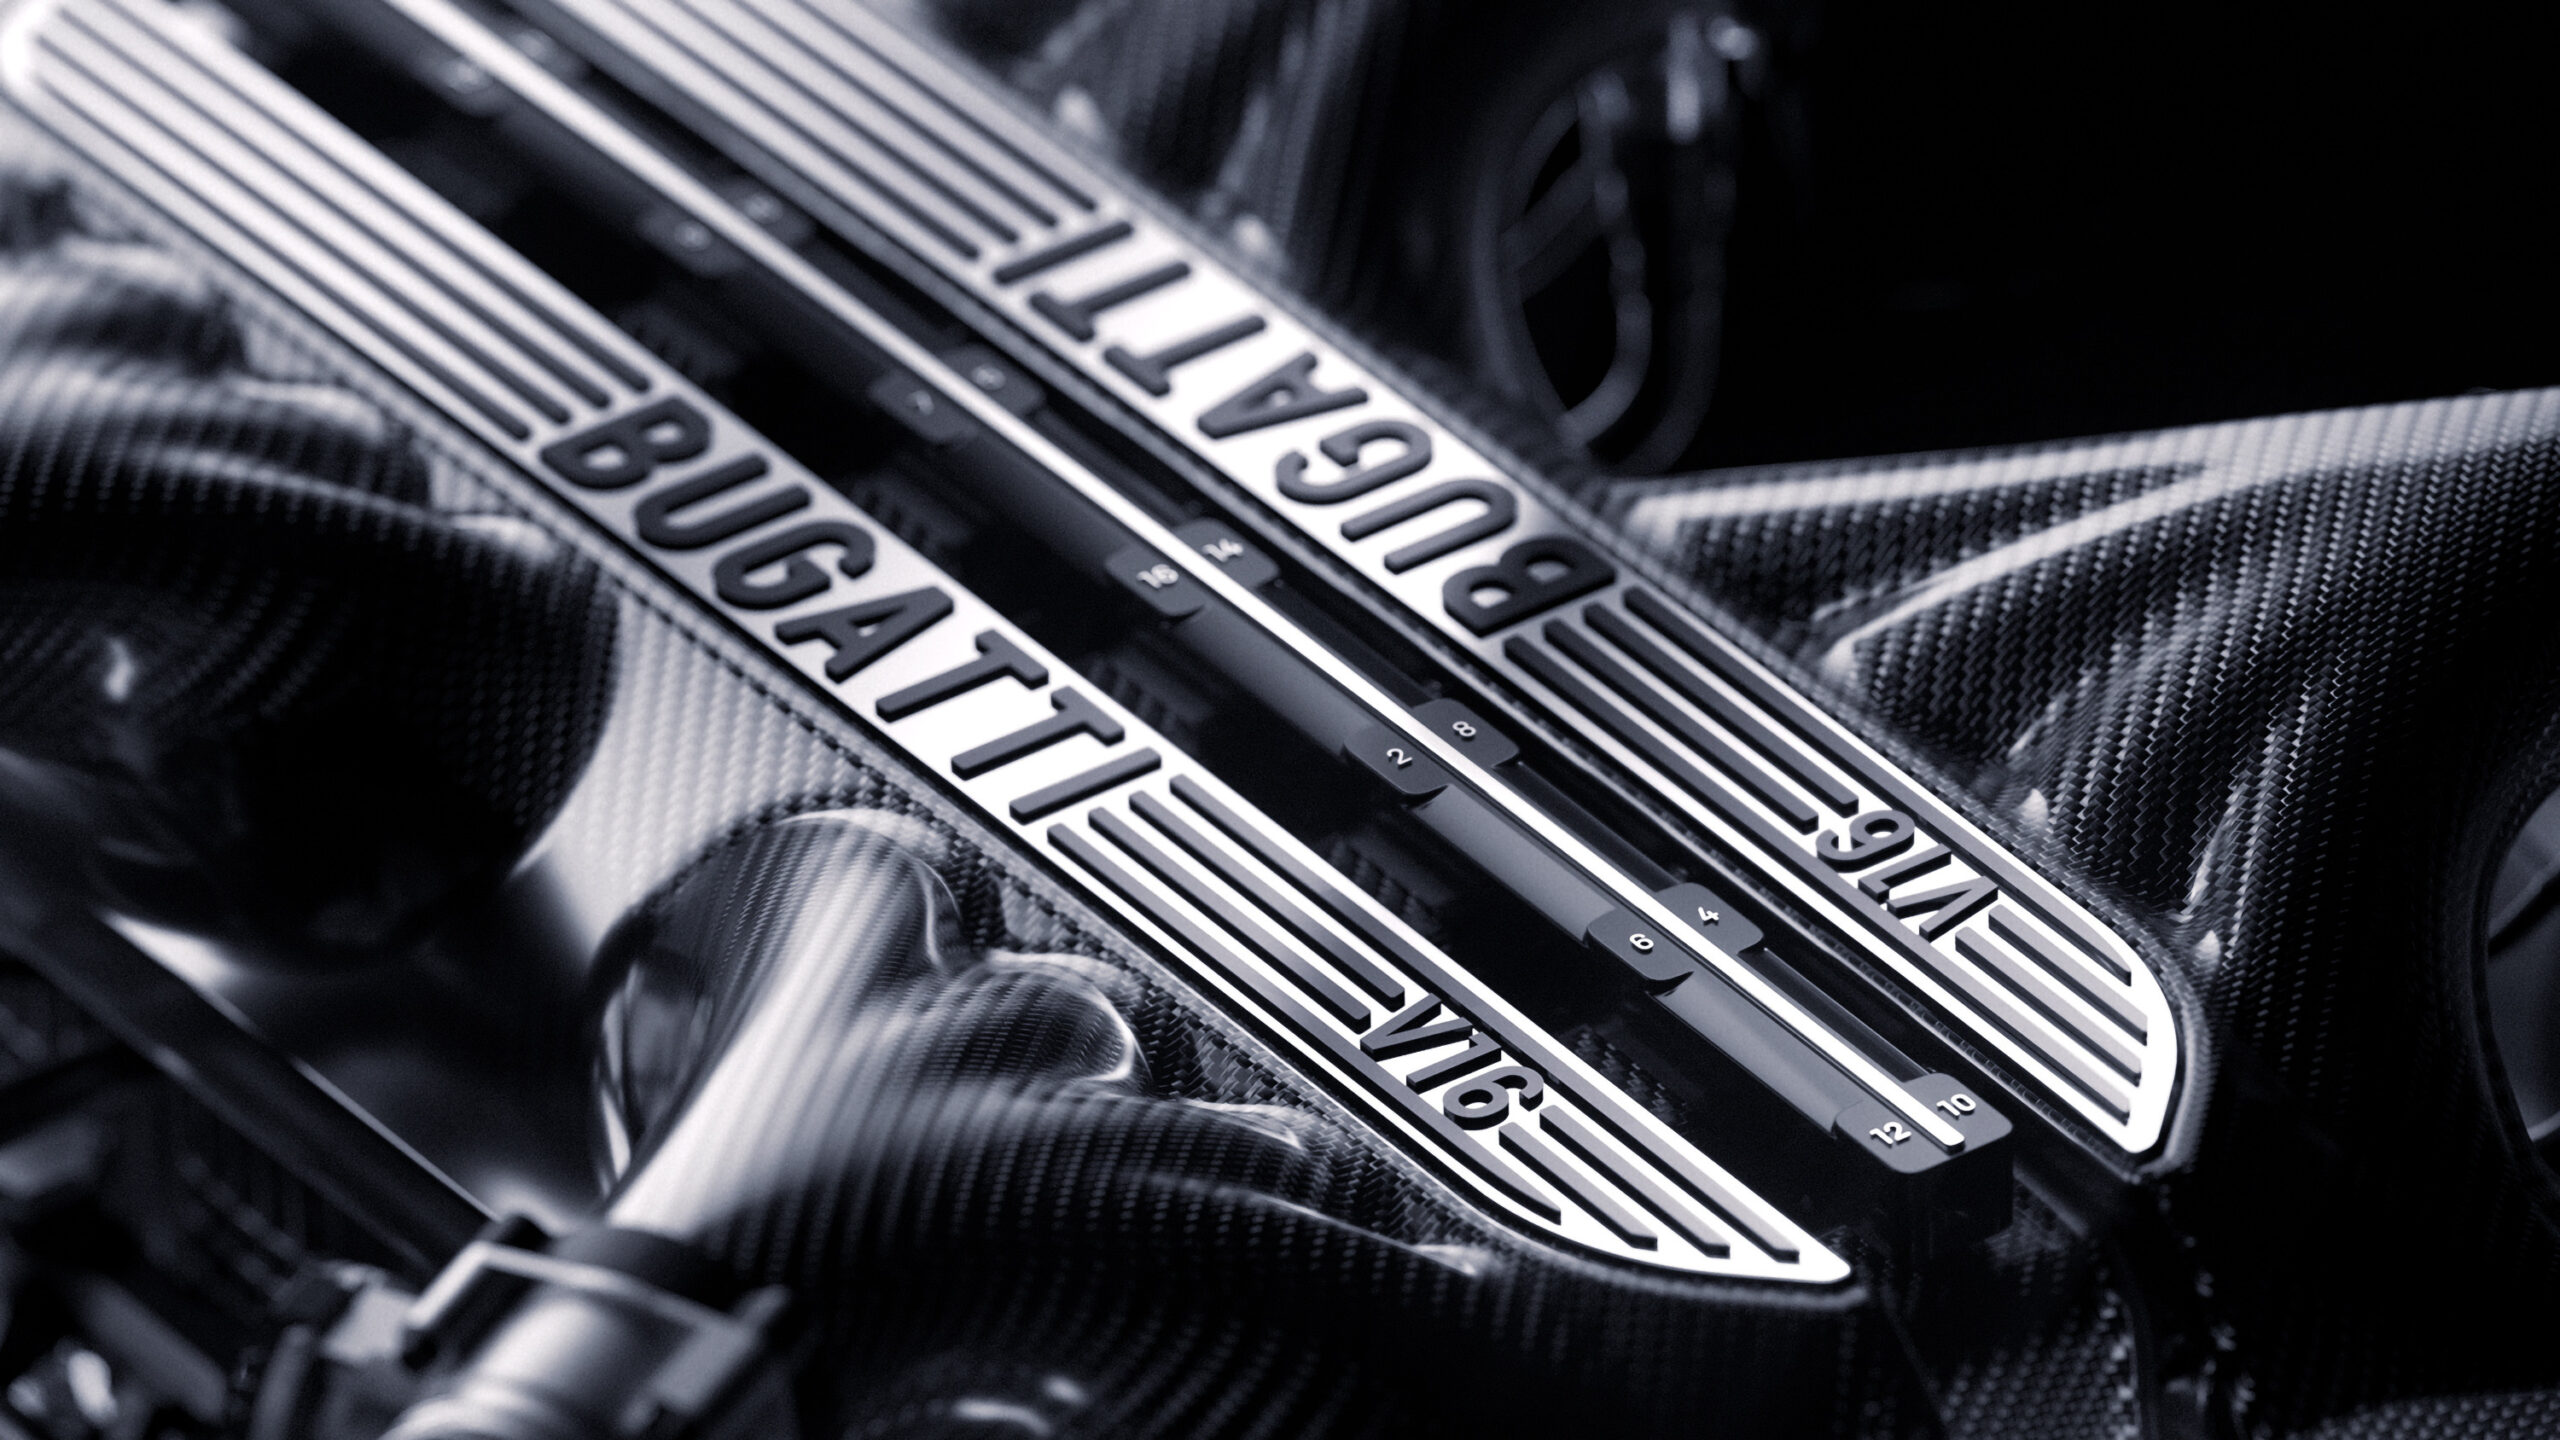 The Next Bugatti Will Have a Hybrid V16